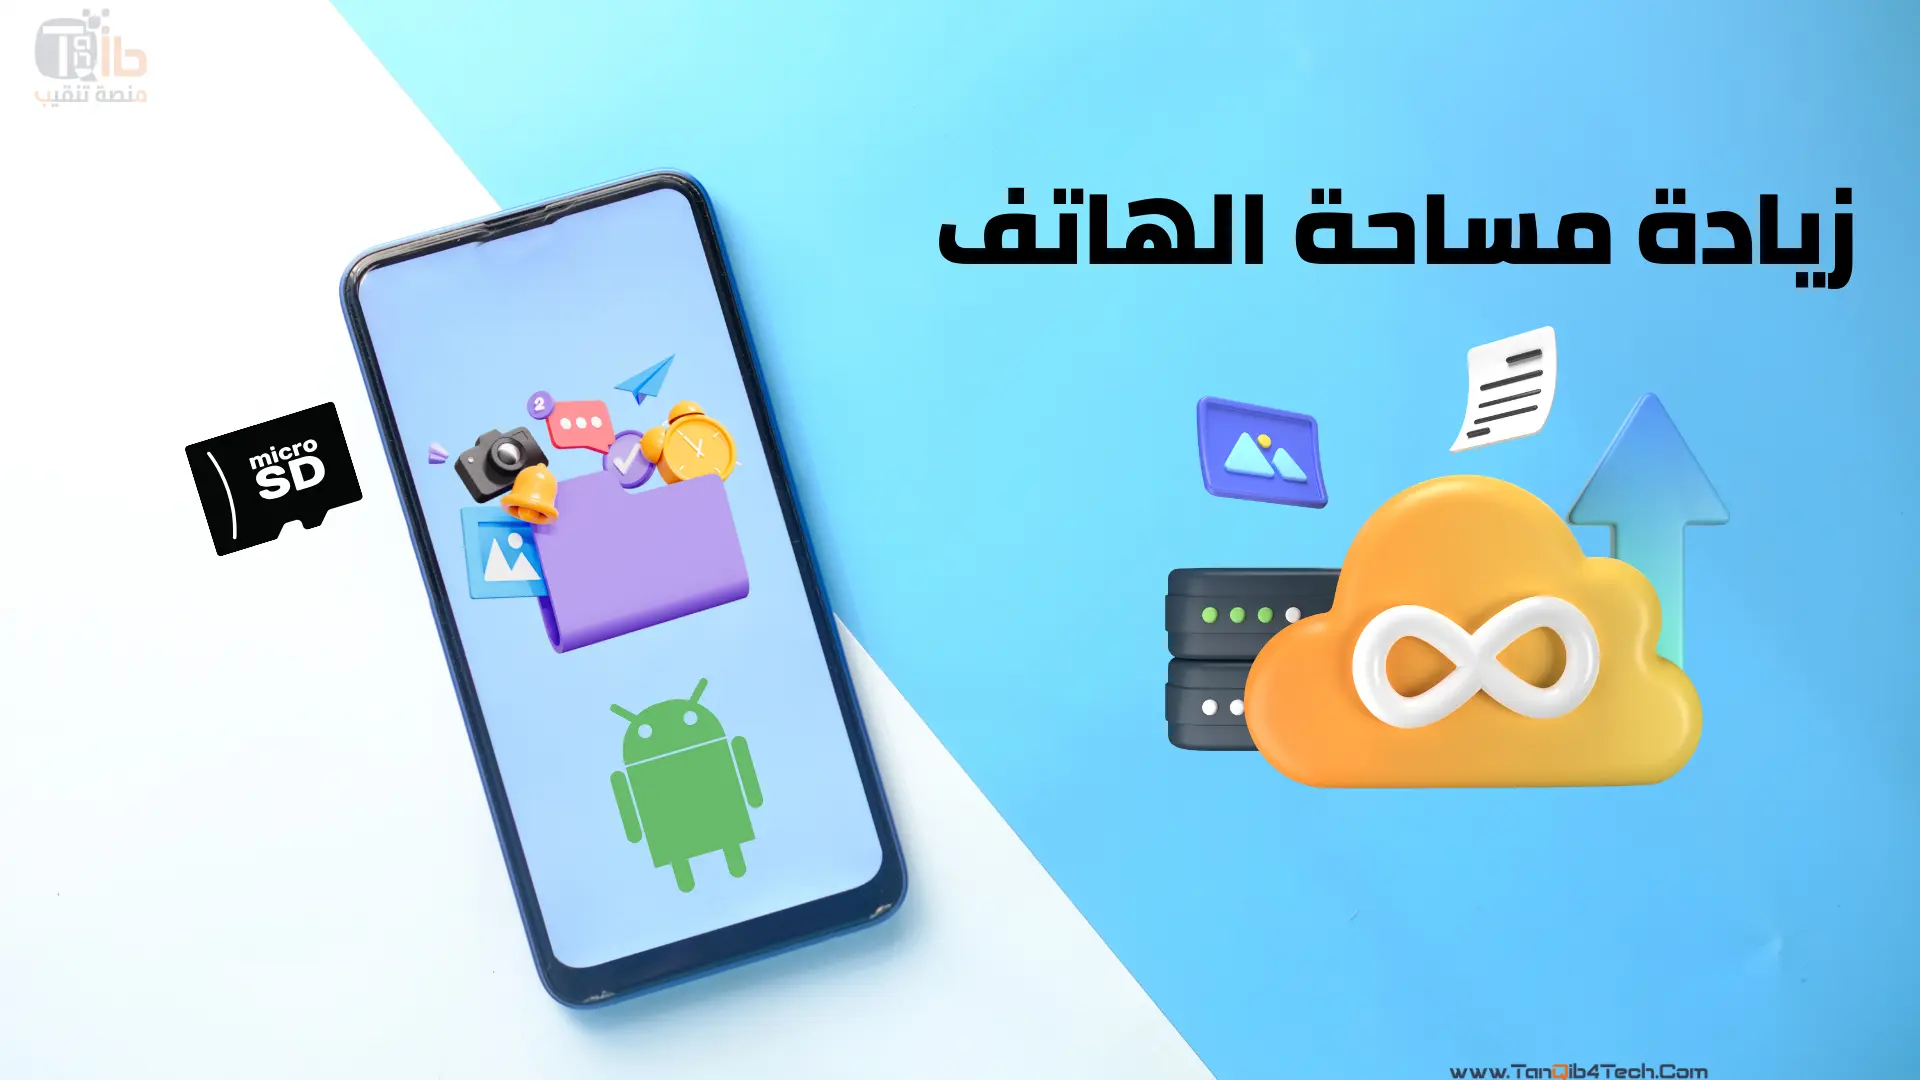 You are currently viewing زيادة مساحة الهاتف الاندرويد بأسهل 3 طرق